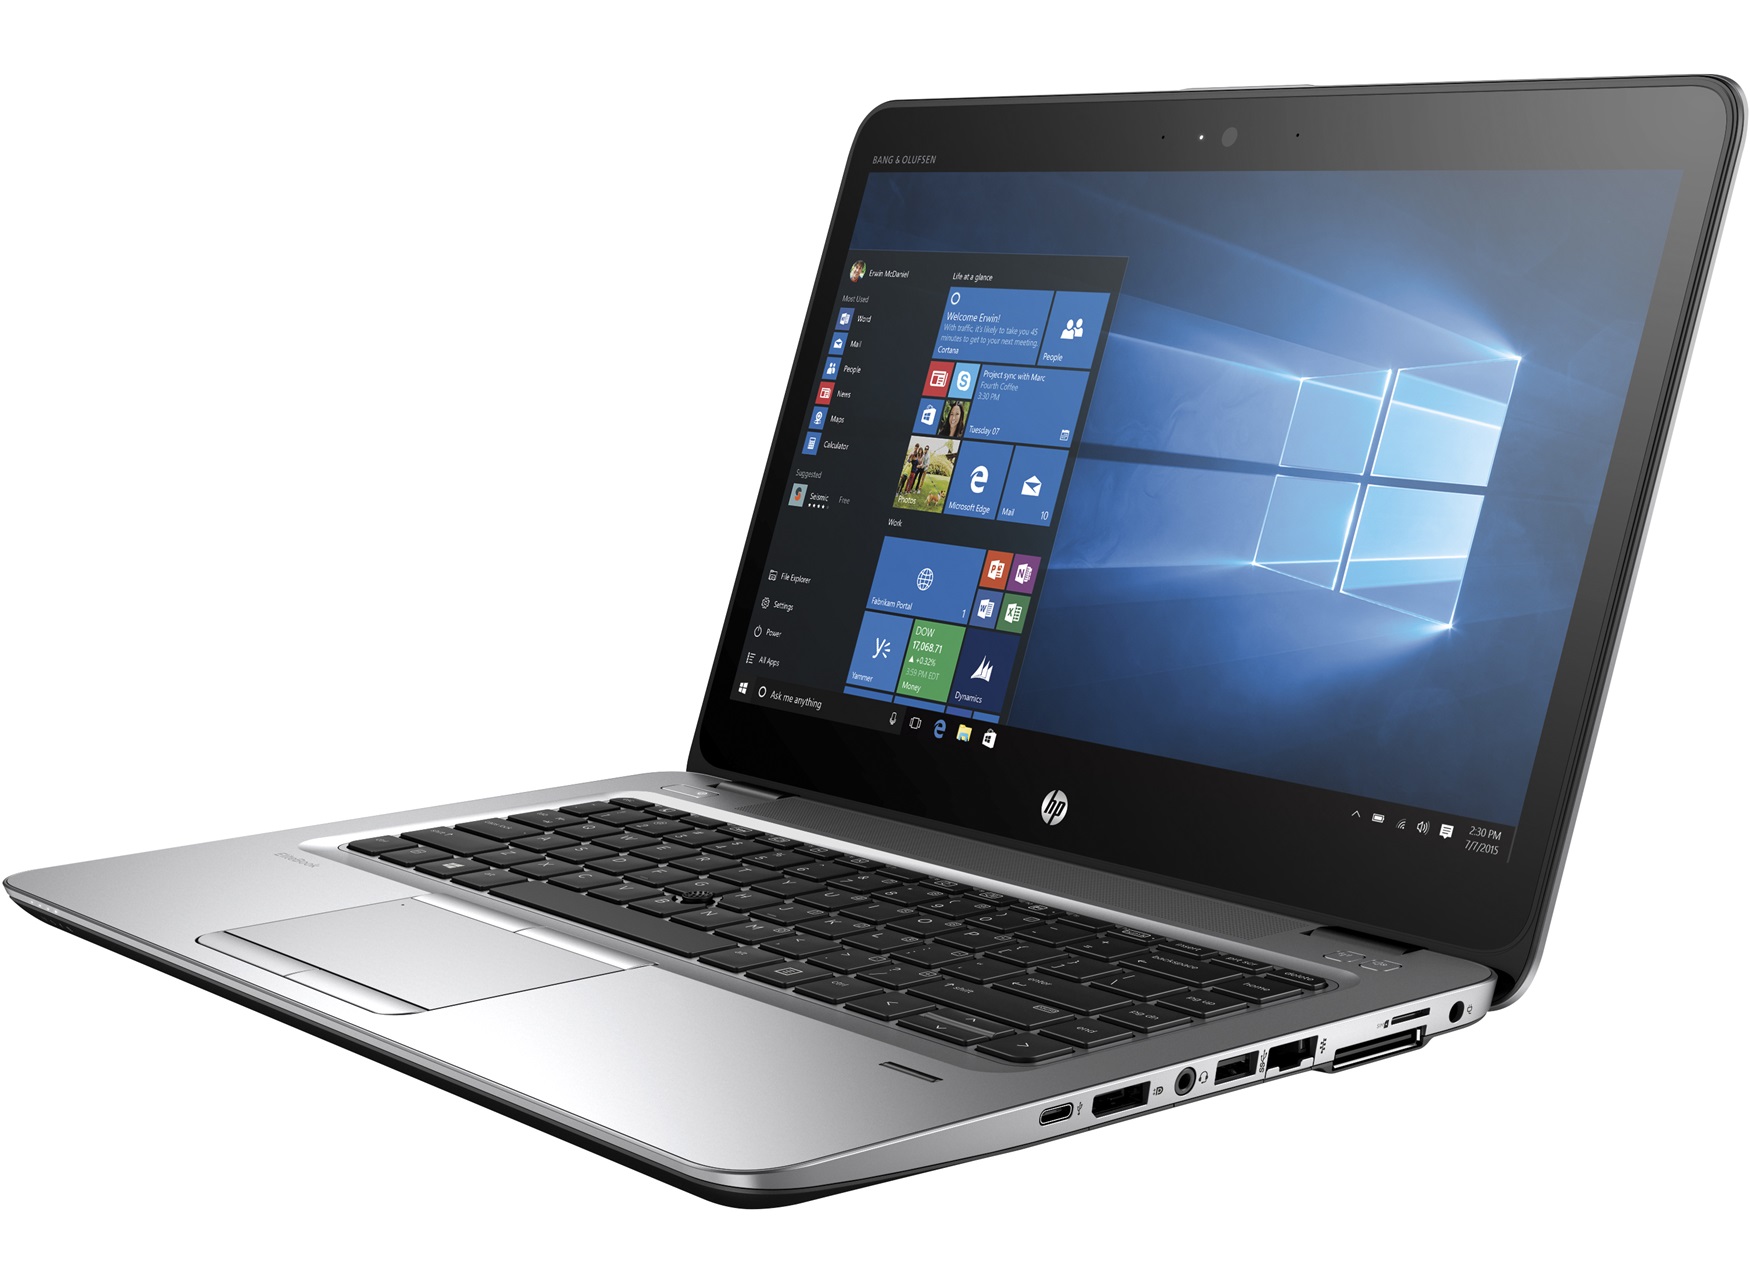 HP EliteBook 840 G3 - laptop 7 triệu đồng